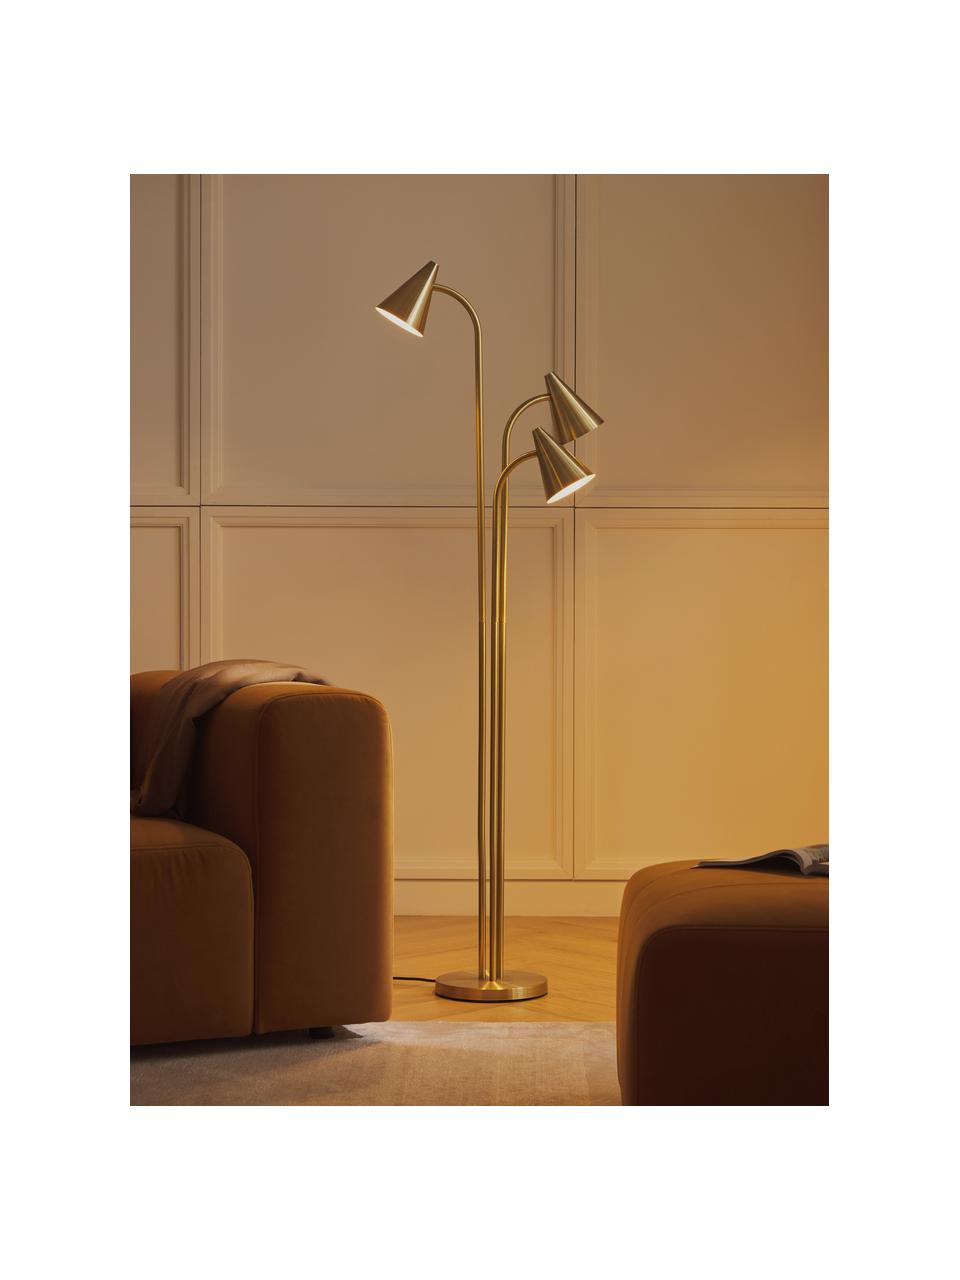 Metalen vloerlamp Arturo, Lamp: metaal, gecoat, Goudkleurig, Ø 9 x H 17 cm, 250 ml